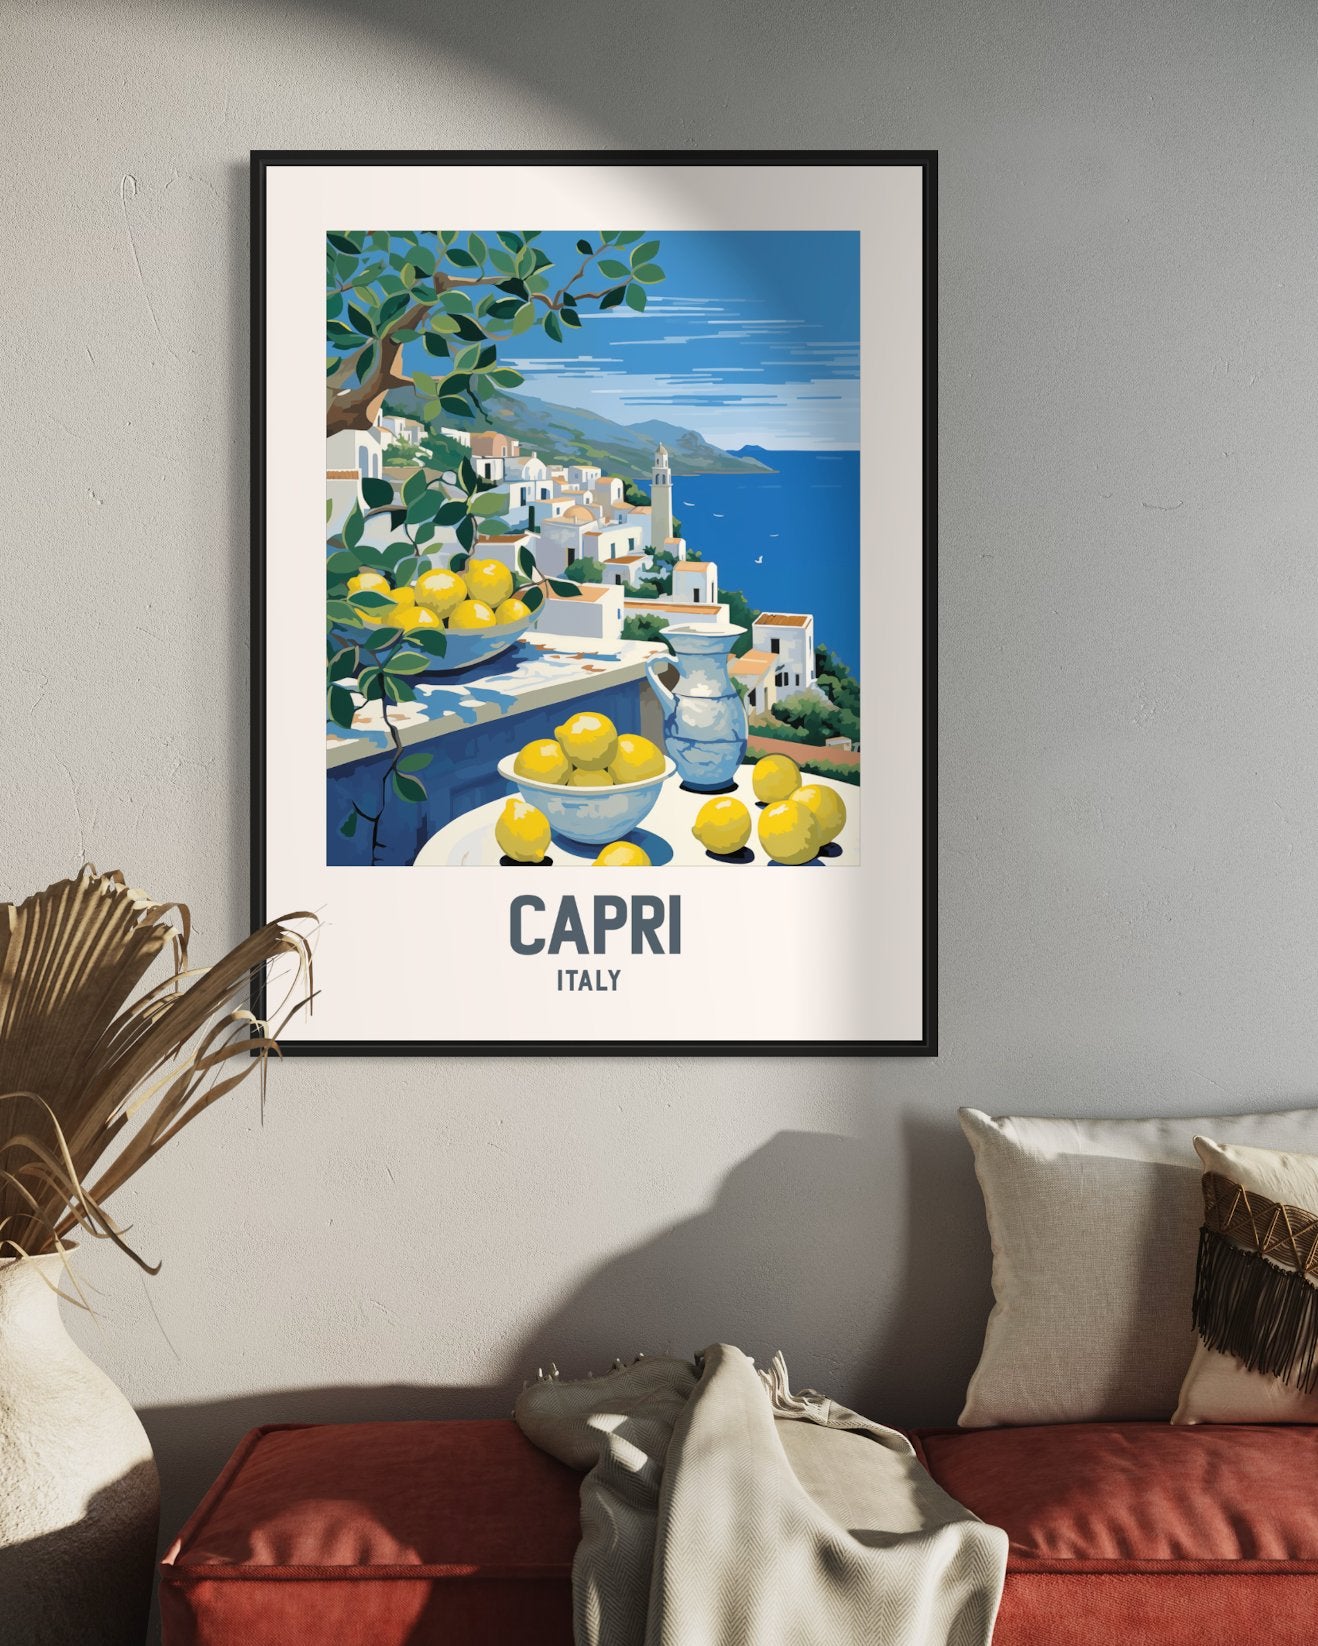 Capri Italy Travel Print, Capri Wall Decor, Capri Home Living Decor, Capri  Italy Illustration Travel Poster For Capri Italy Home Decor